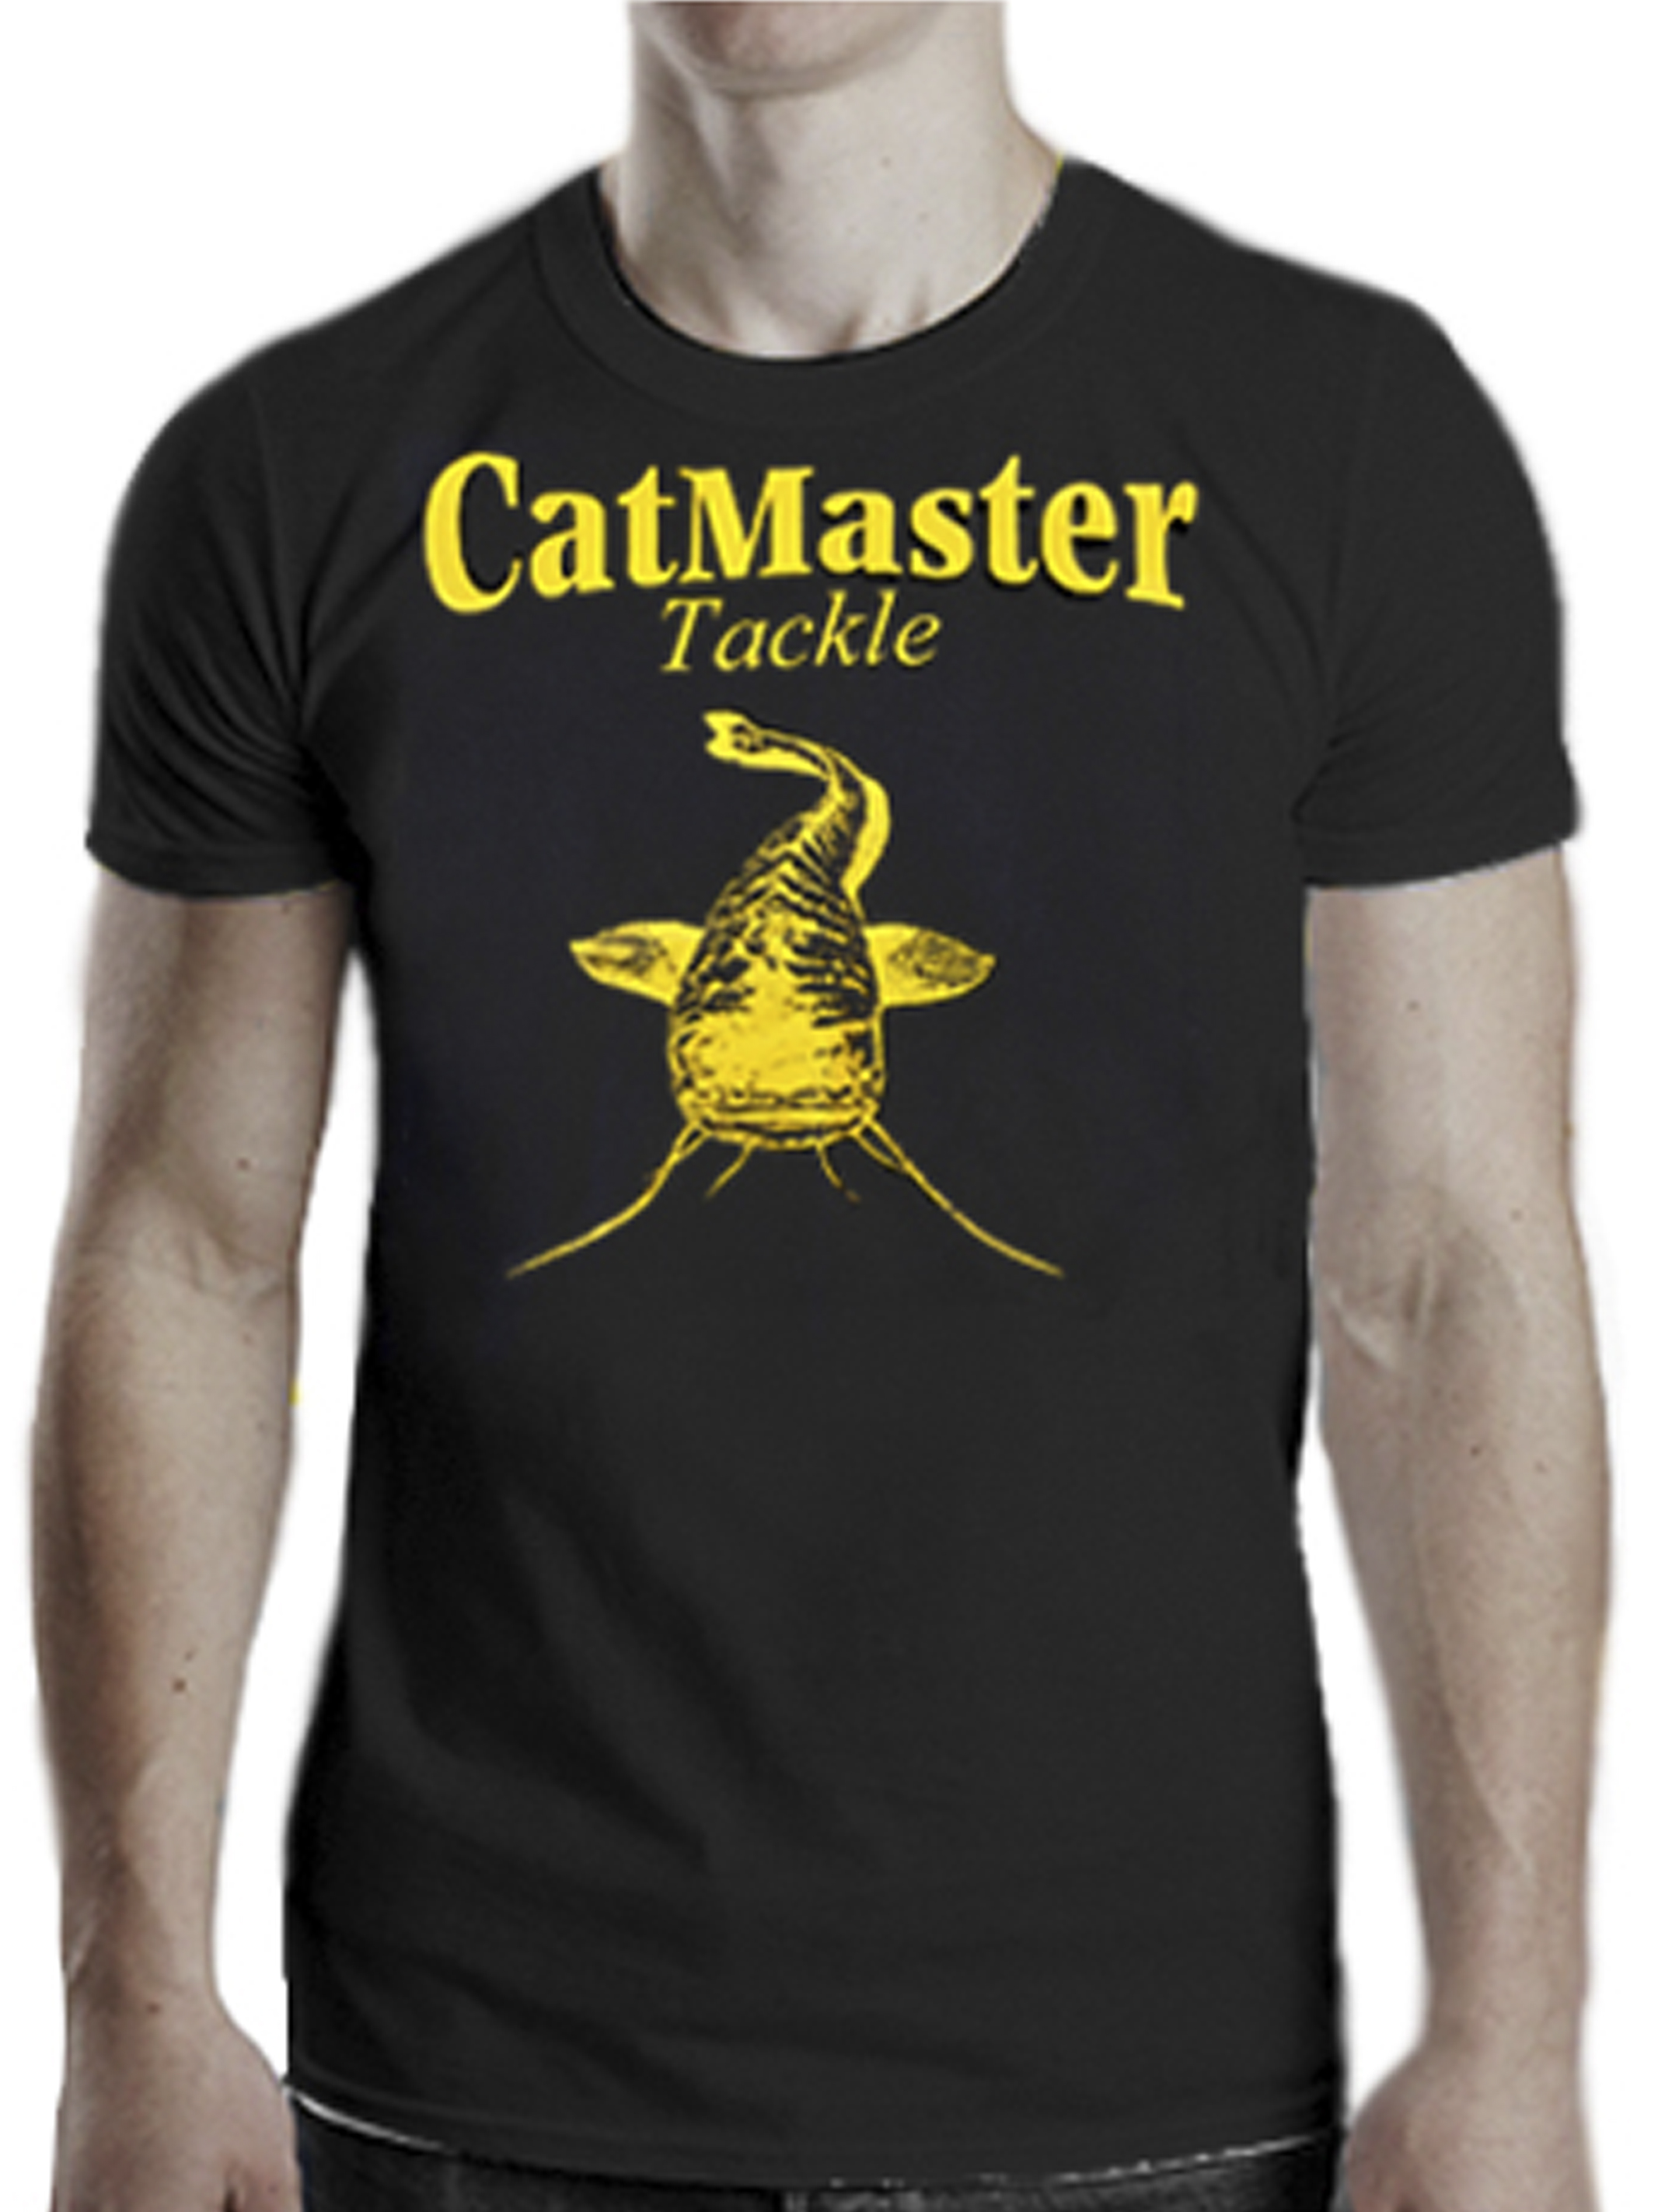 CatMaster Tackle T-Shirt Black